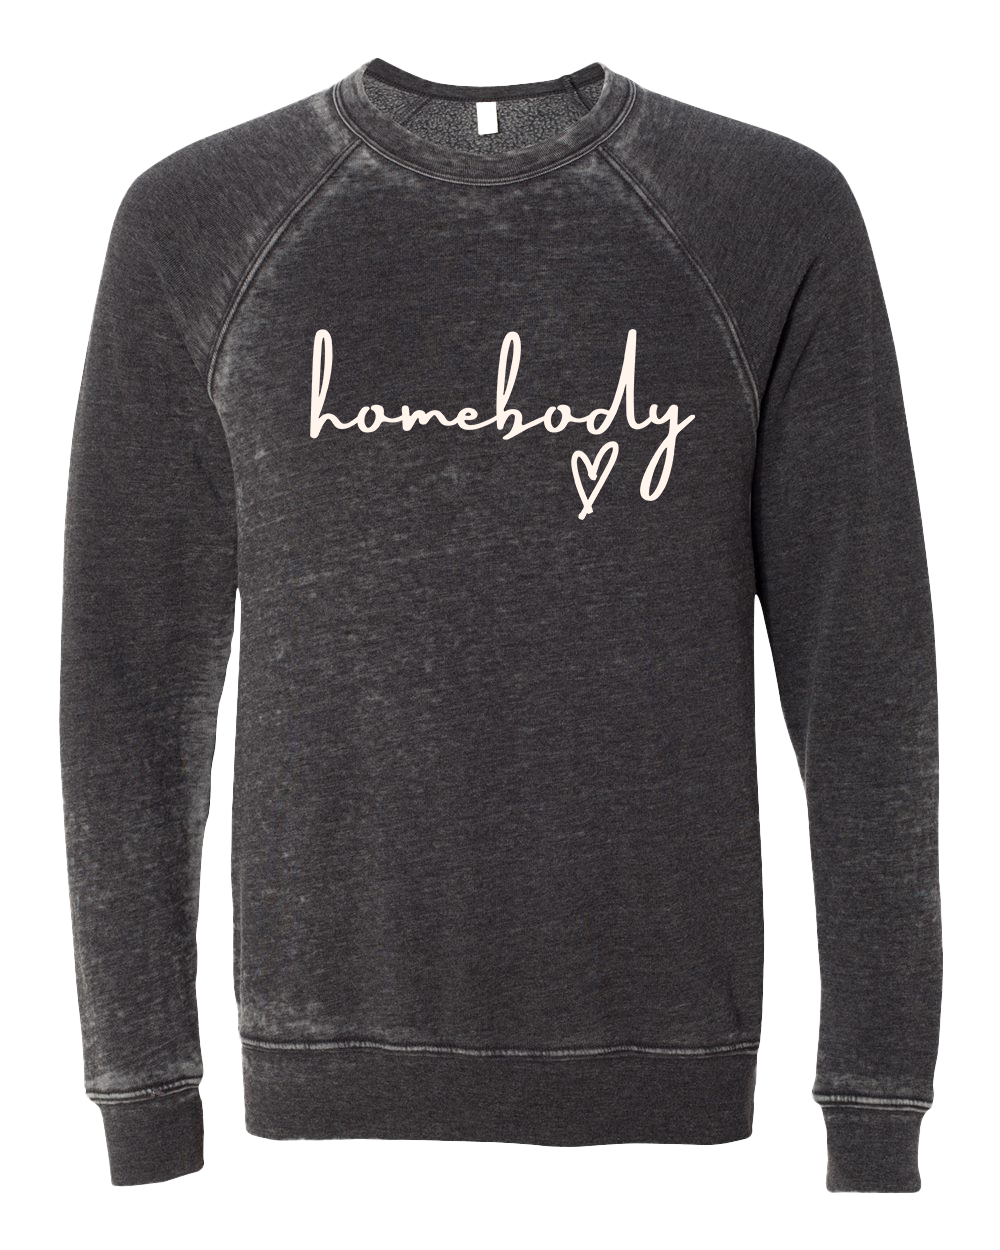 Homebody Crew Sweatshirt